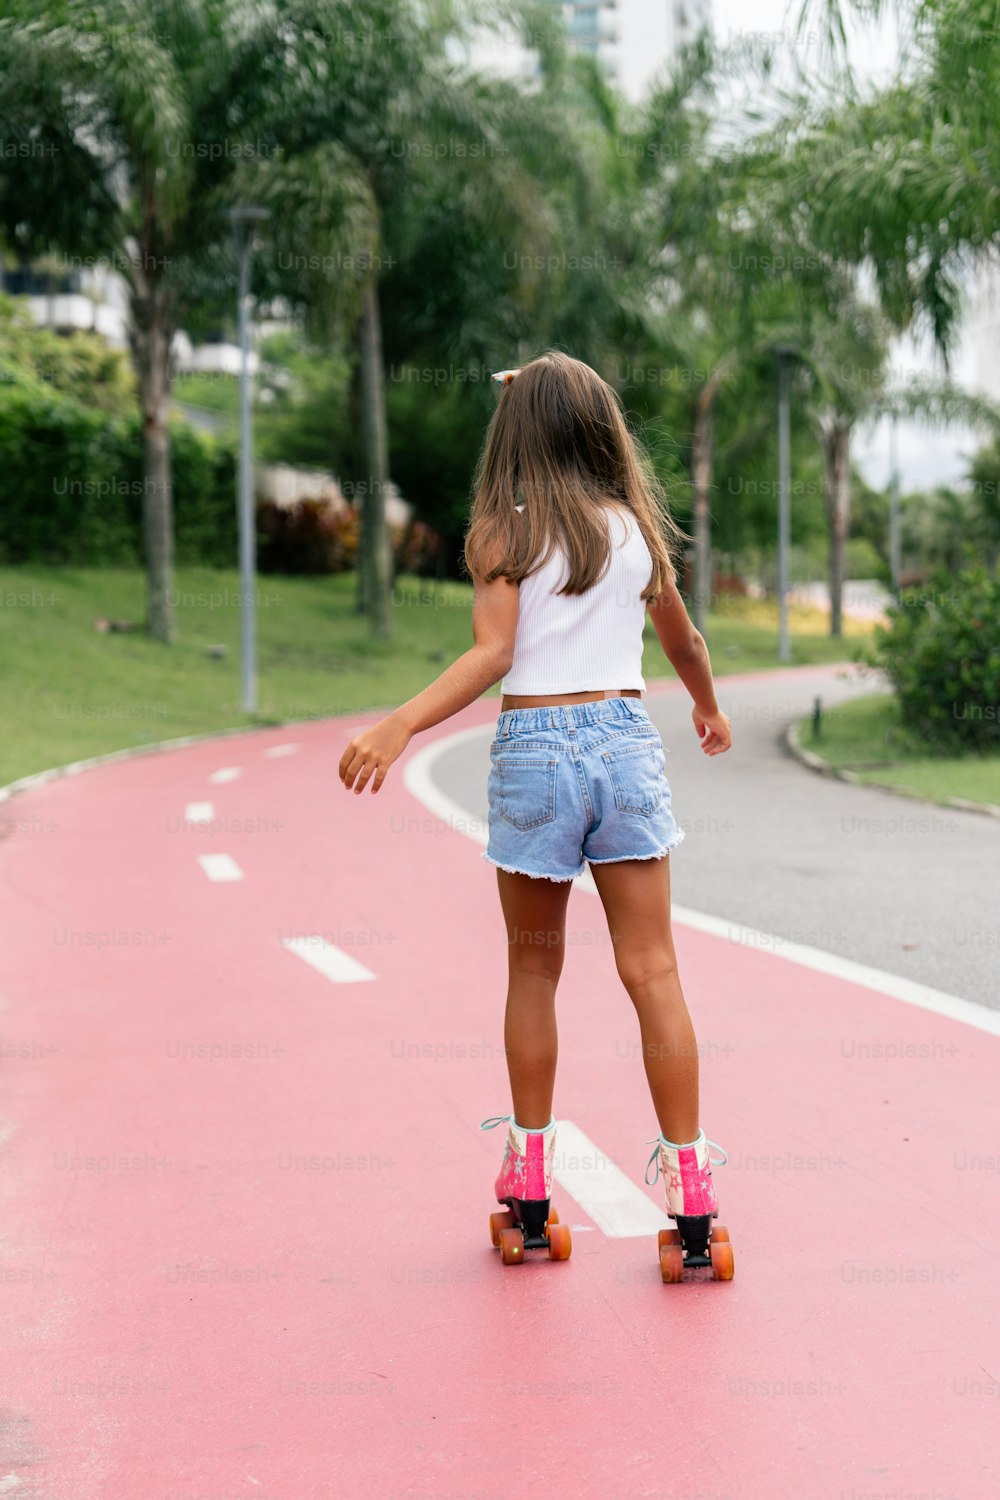 a little girl riding a skateboard down a pink road